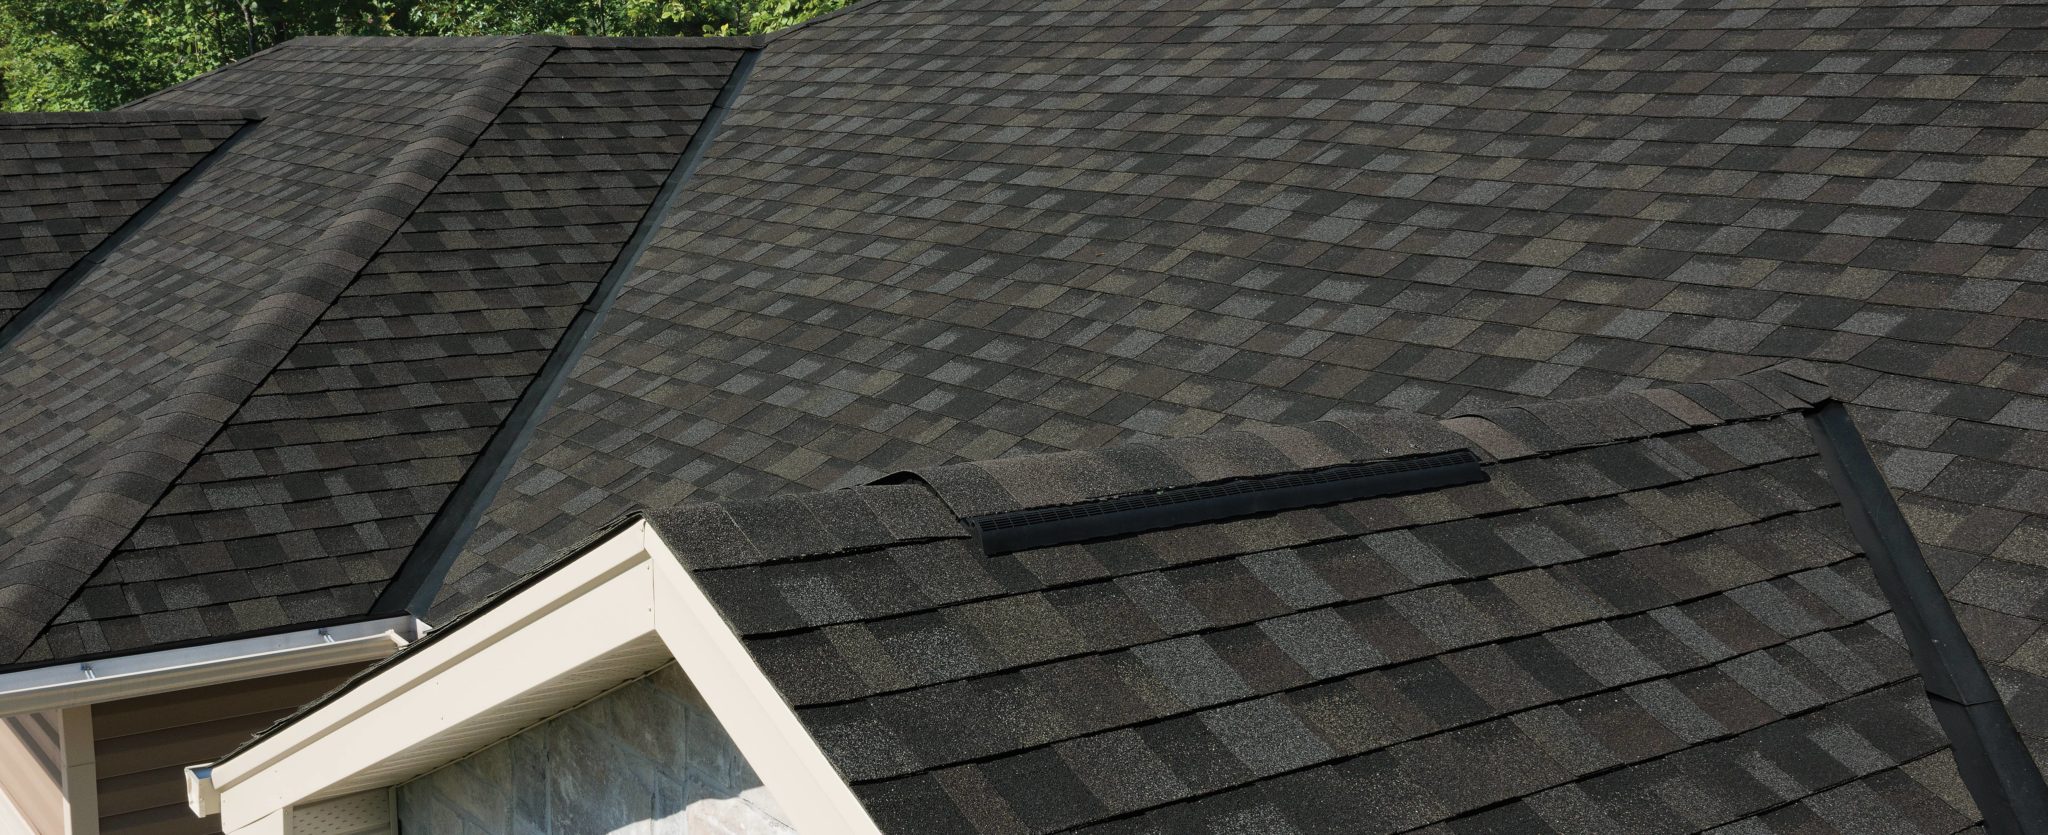 Roof Vents 101 Install Roof Vents For Proper Attic